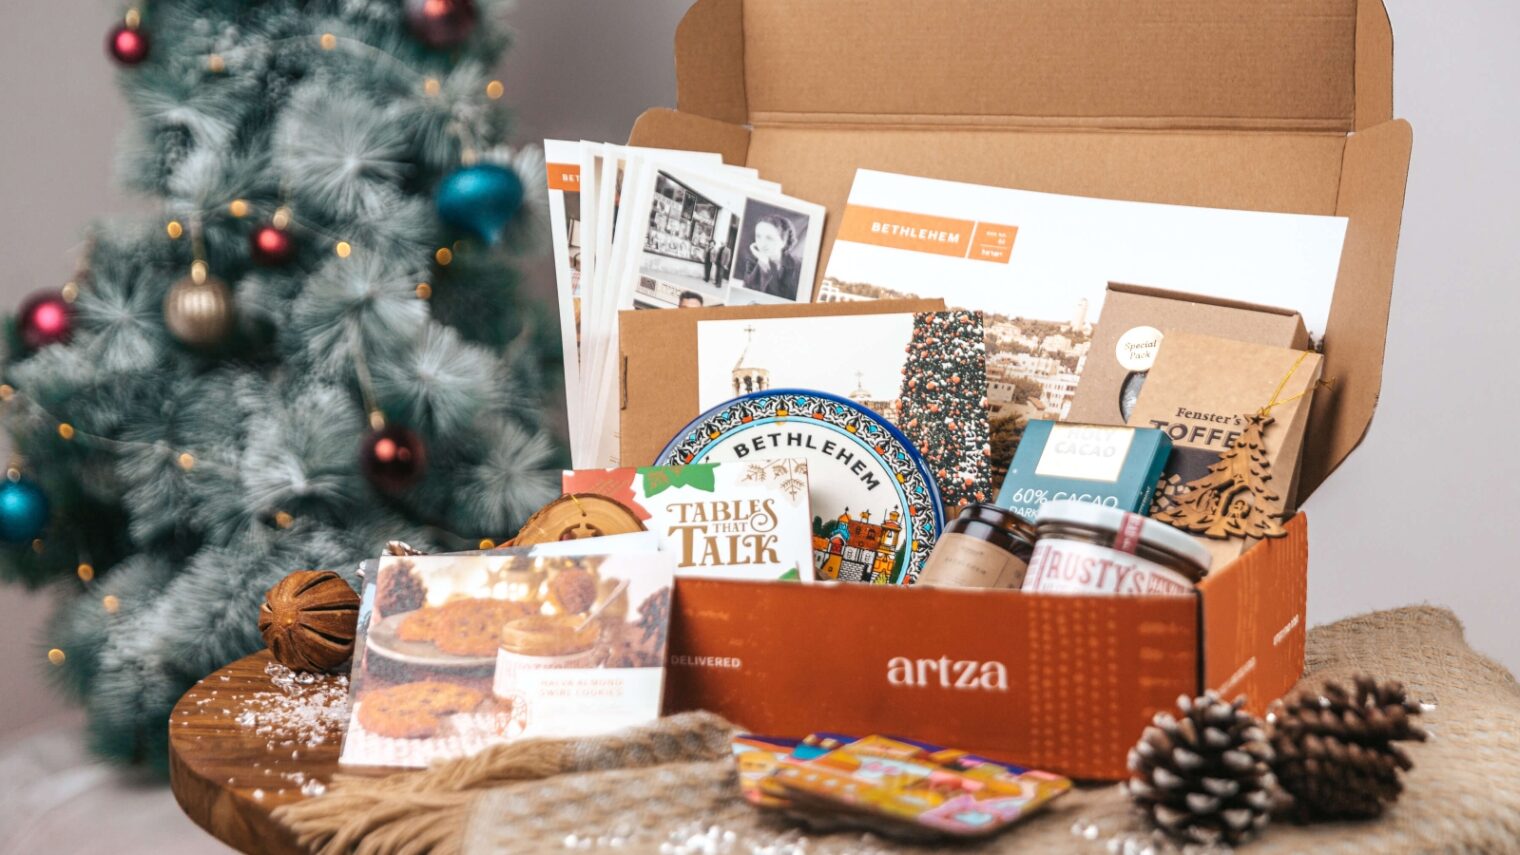 The “Christmas special” box of Israeli-made goods. Photo courtesy of Artza